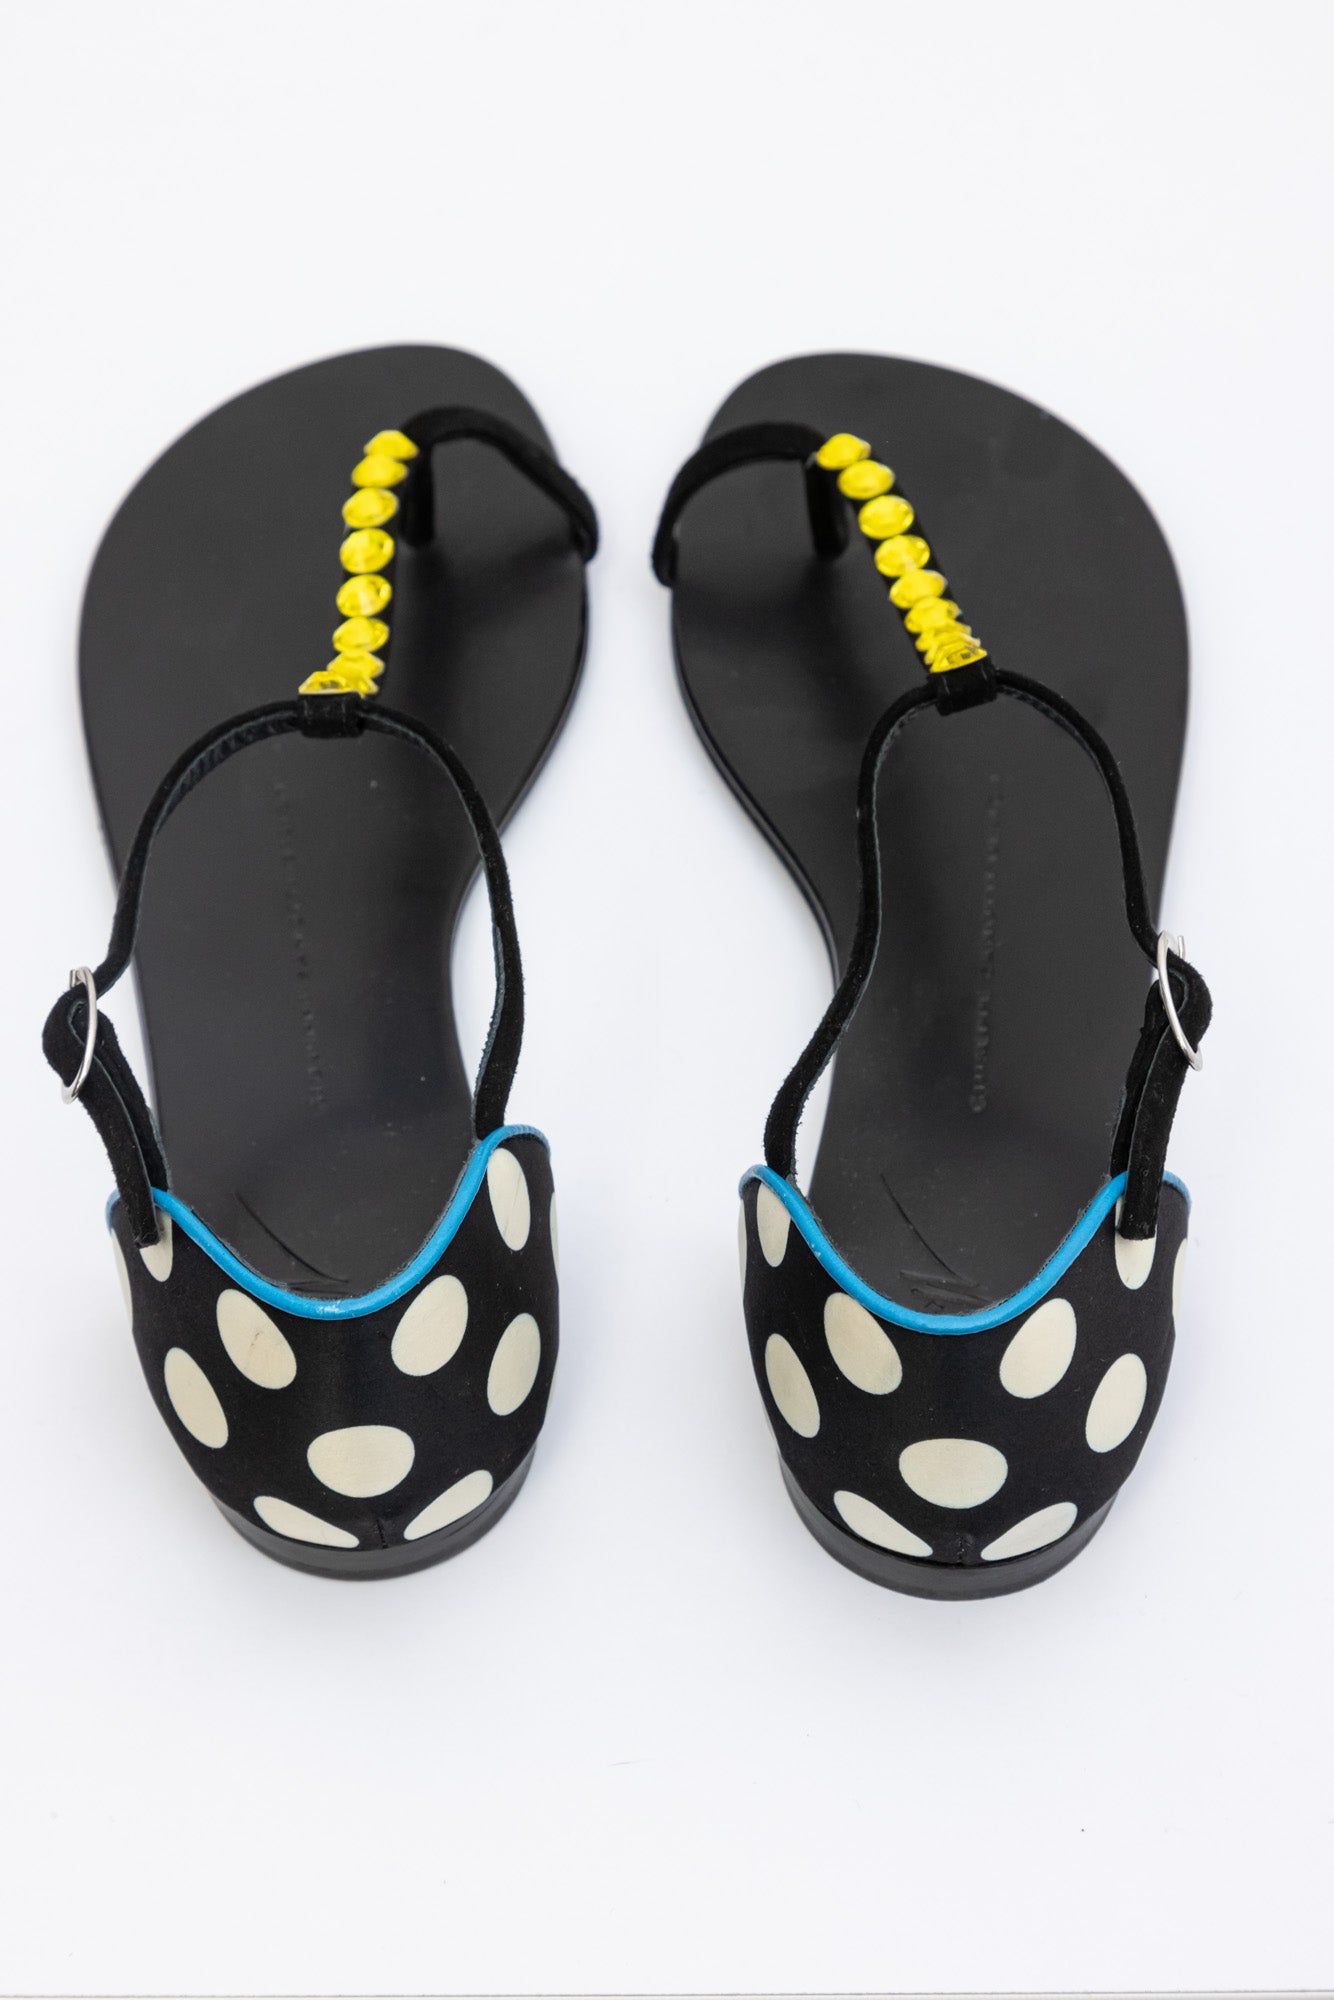 Giuseppe Zanotti Black Polka Dot and Cheetah Print Flat Sandal | Size IT 37.5 | Made in Italy